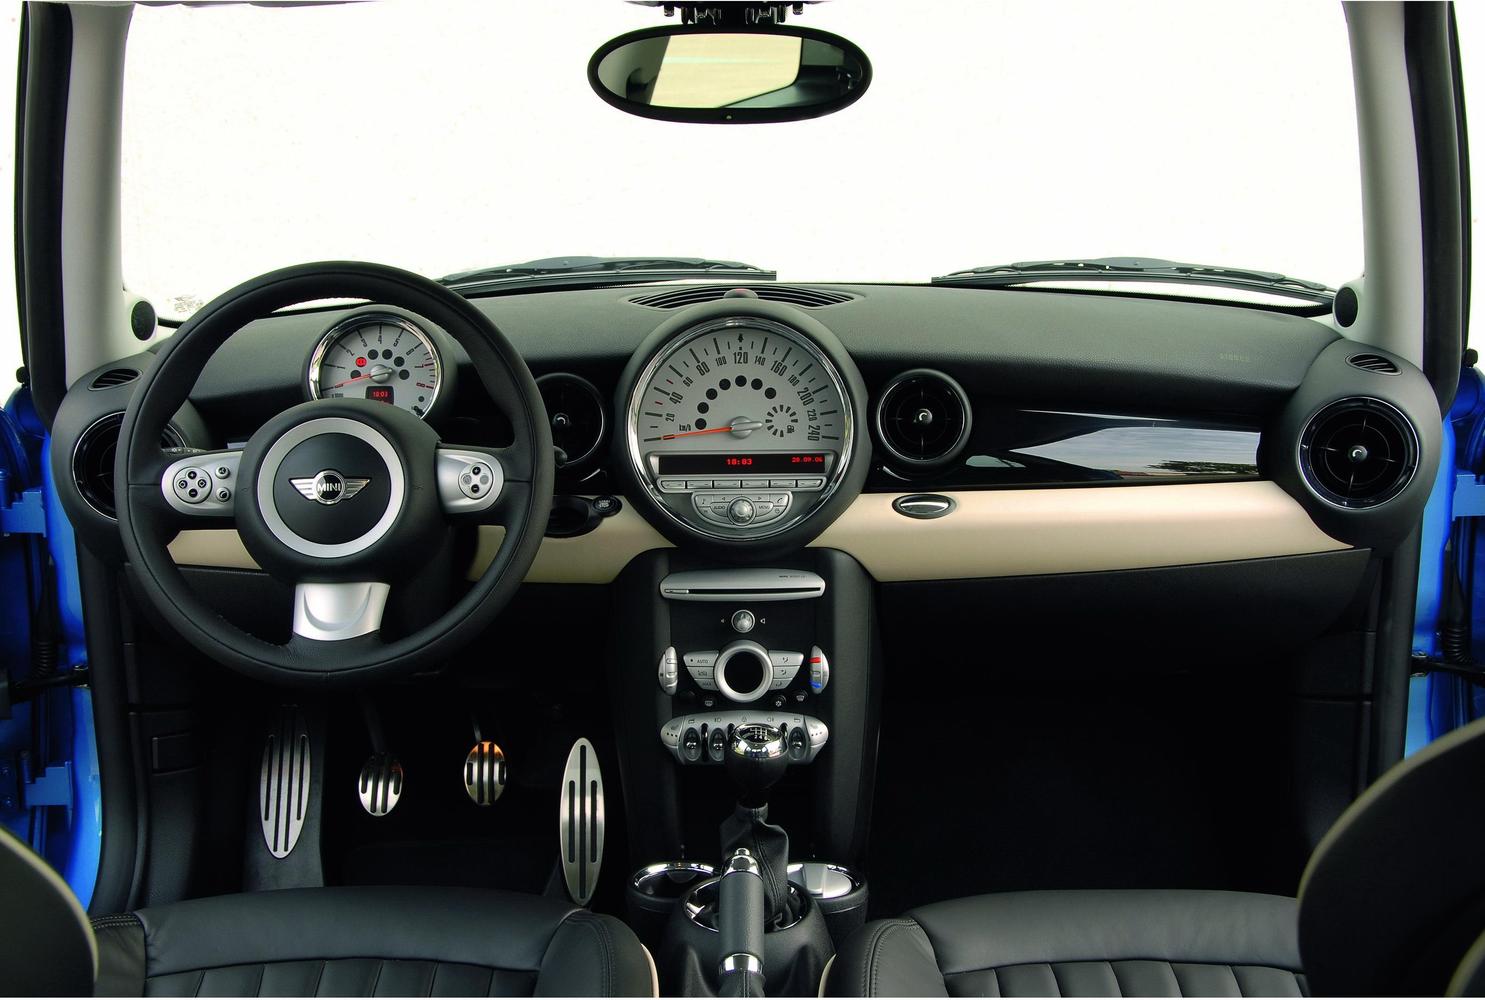 хэтчбек 3 дв. Cooper S MINI Hatch 2006 - 2010г выпуска модификация Cooper S 1.6 AT (175 л.с.)